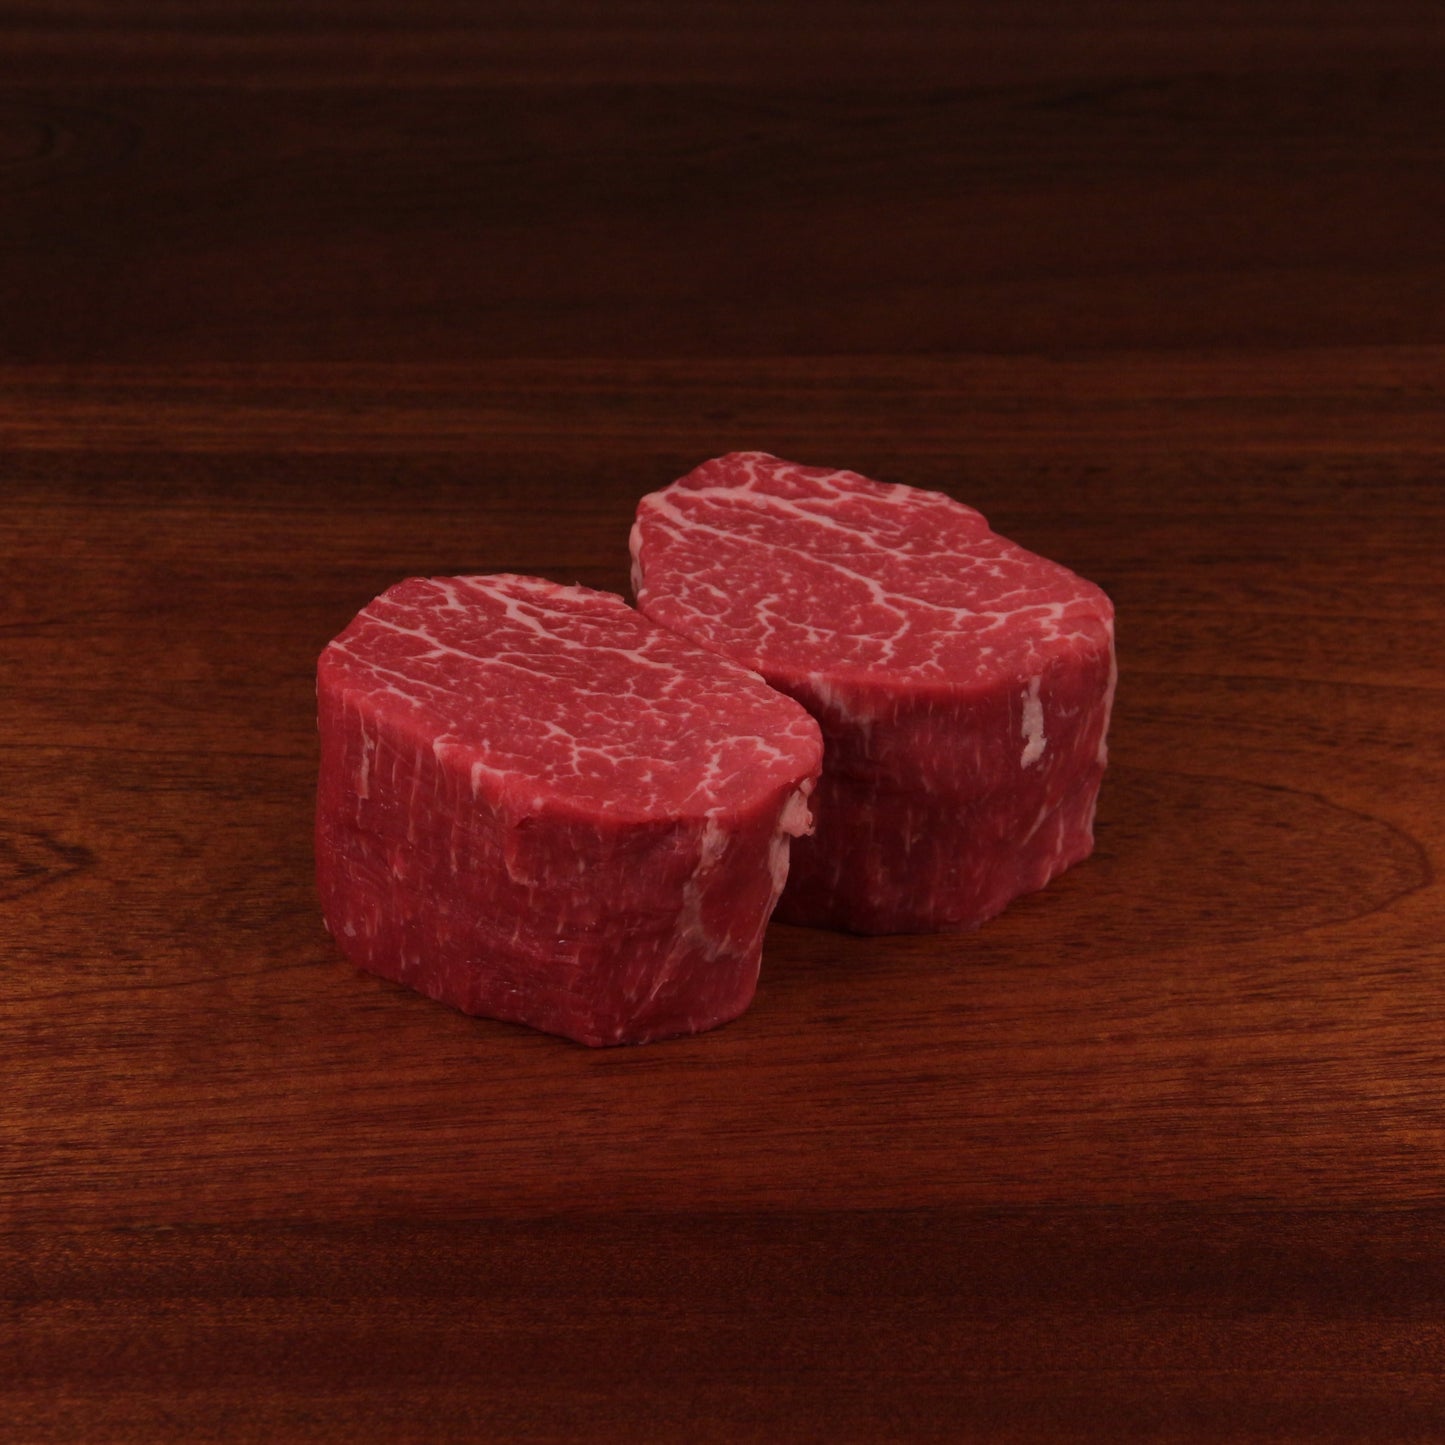 Prime Filet Mignon Steak